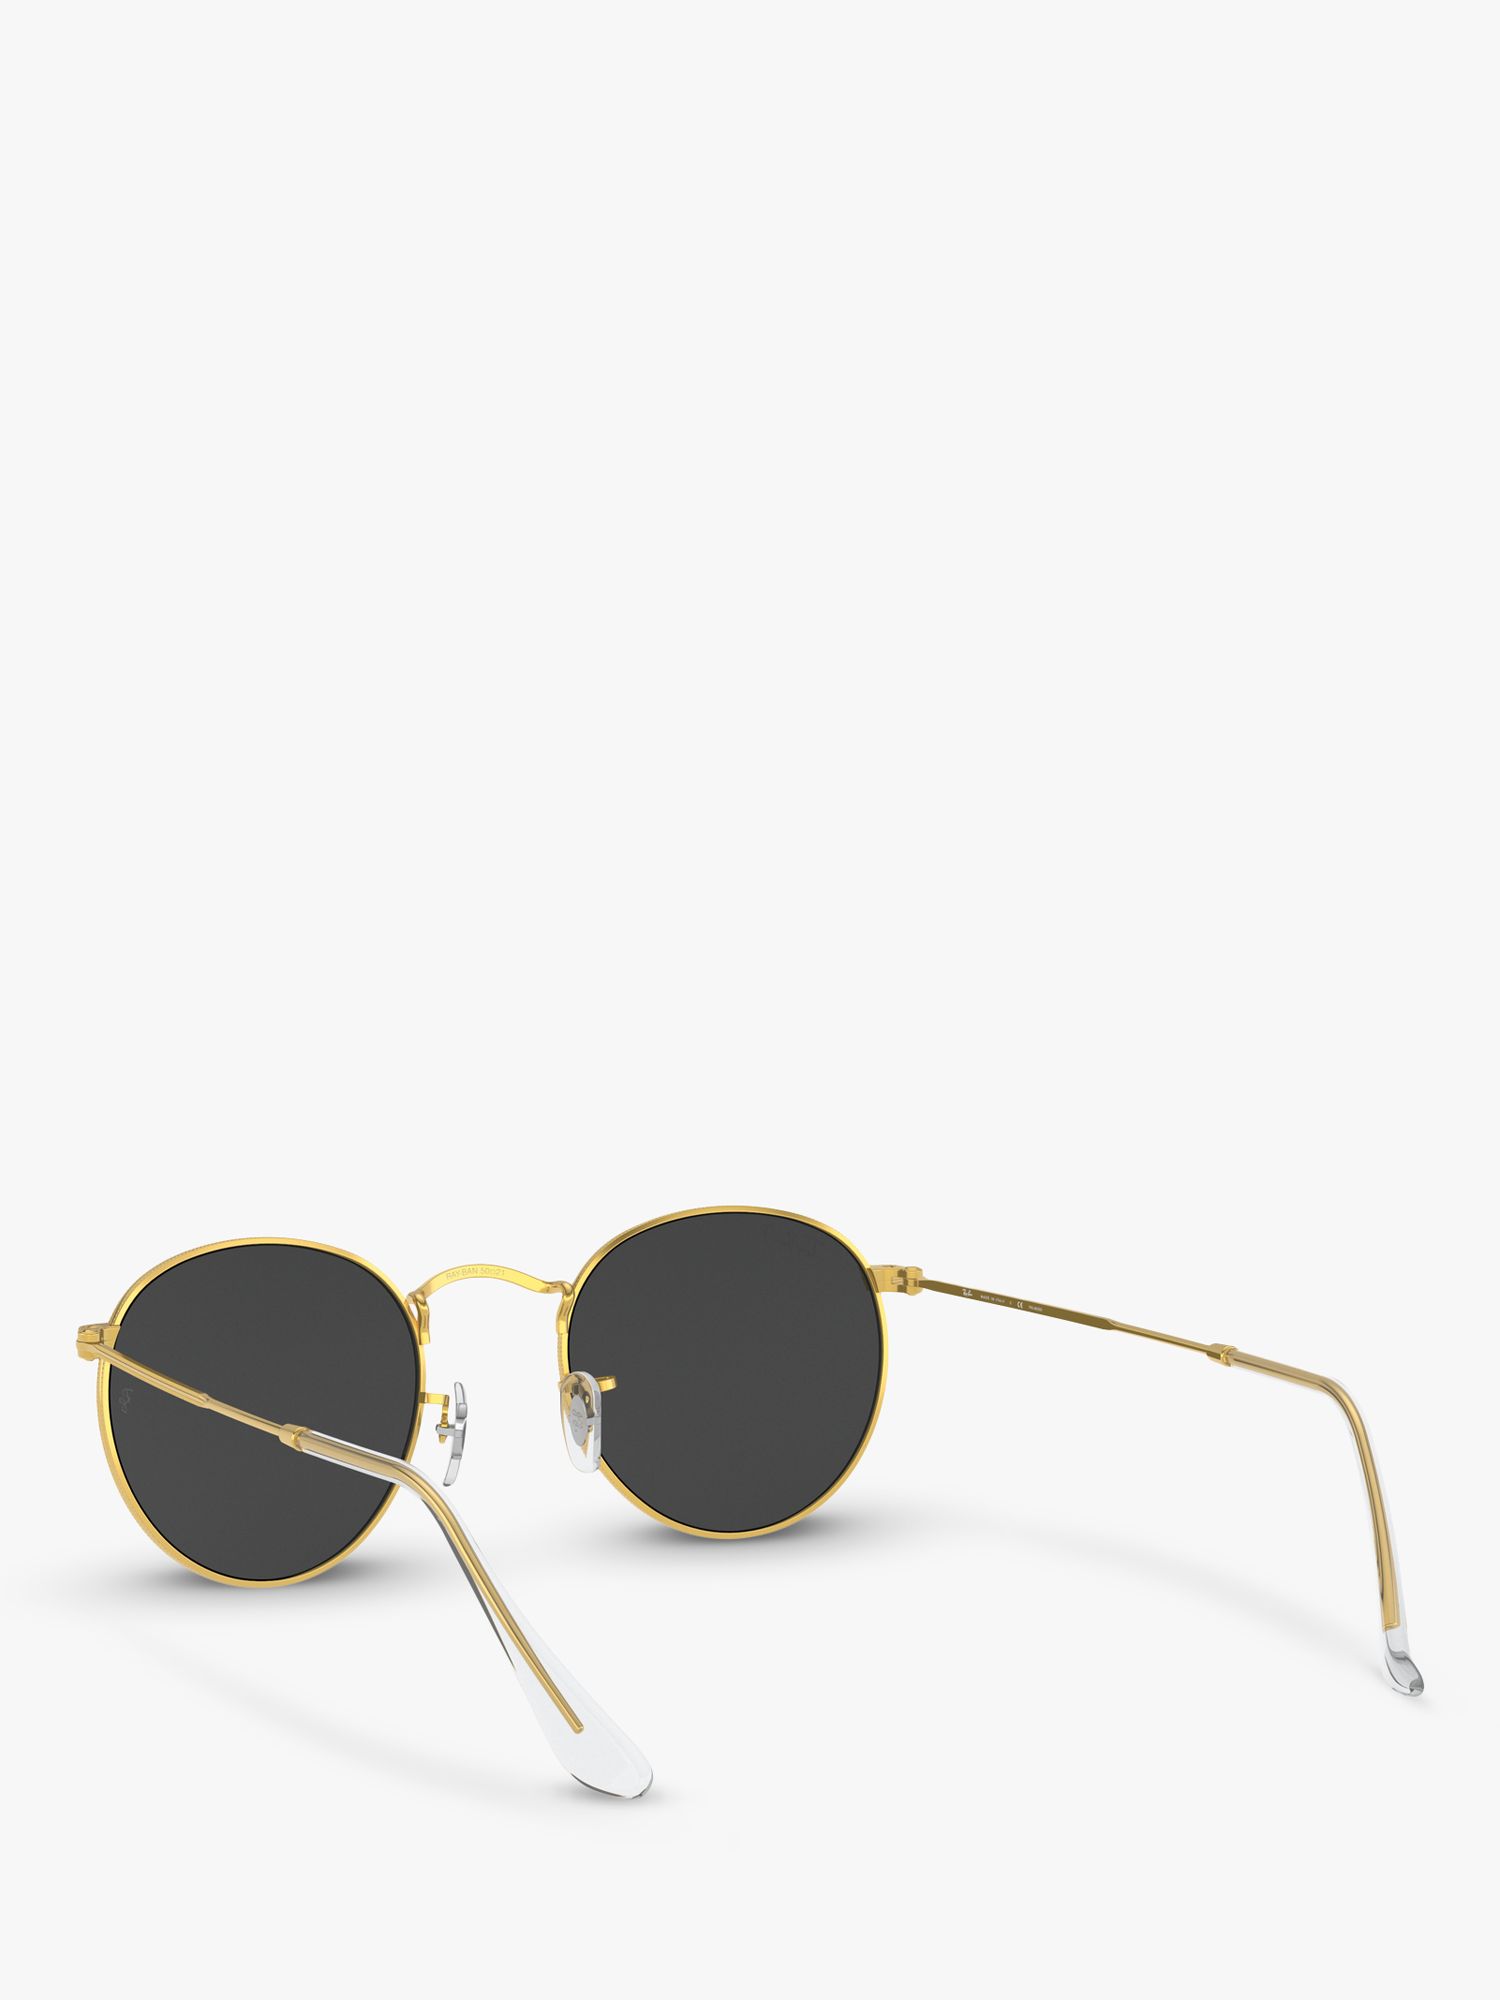 Ray-Ban RB3447 Men's Polarised Round Metal Sunglasses, Gold/Black